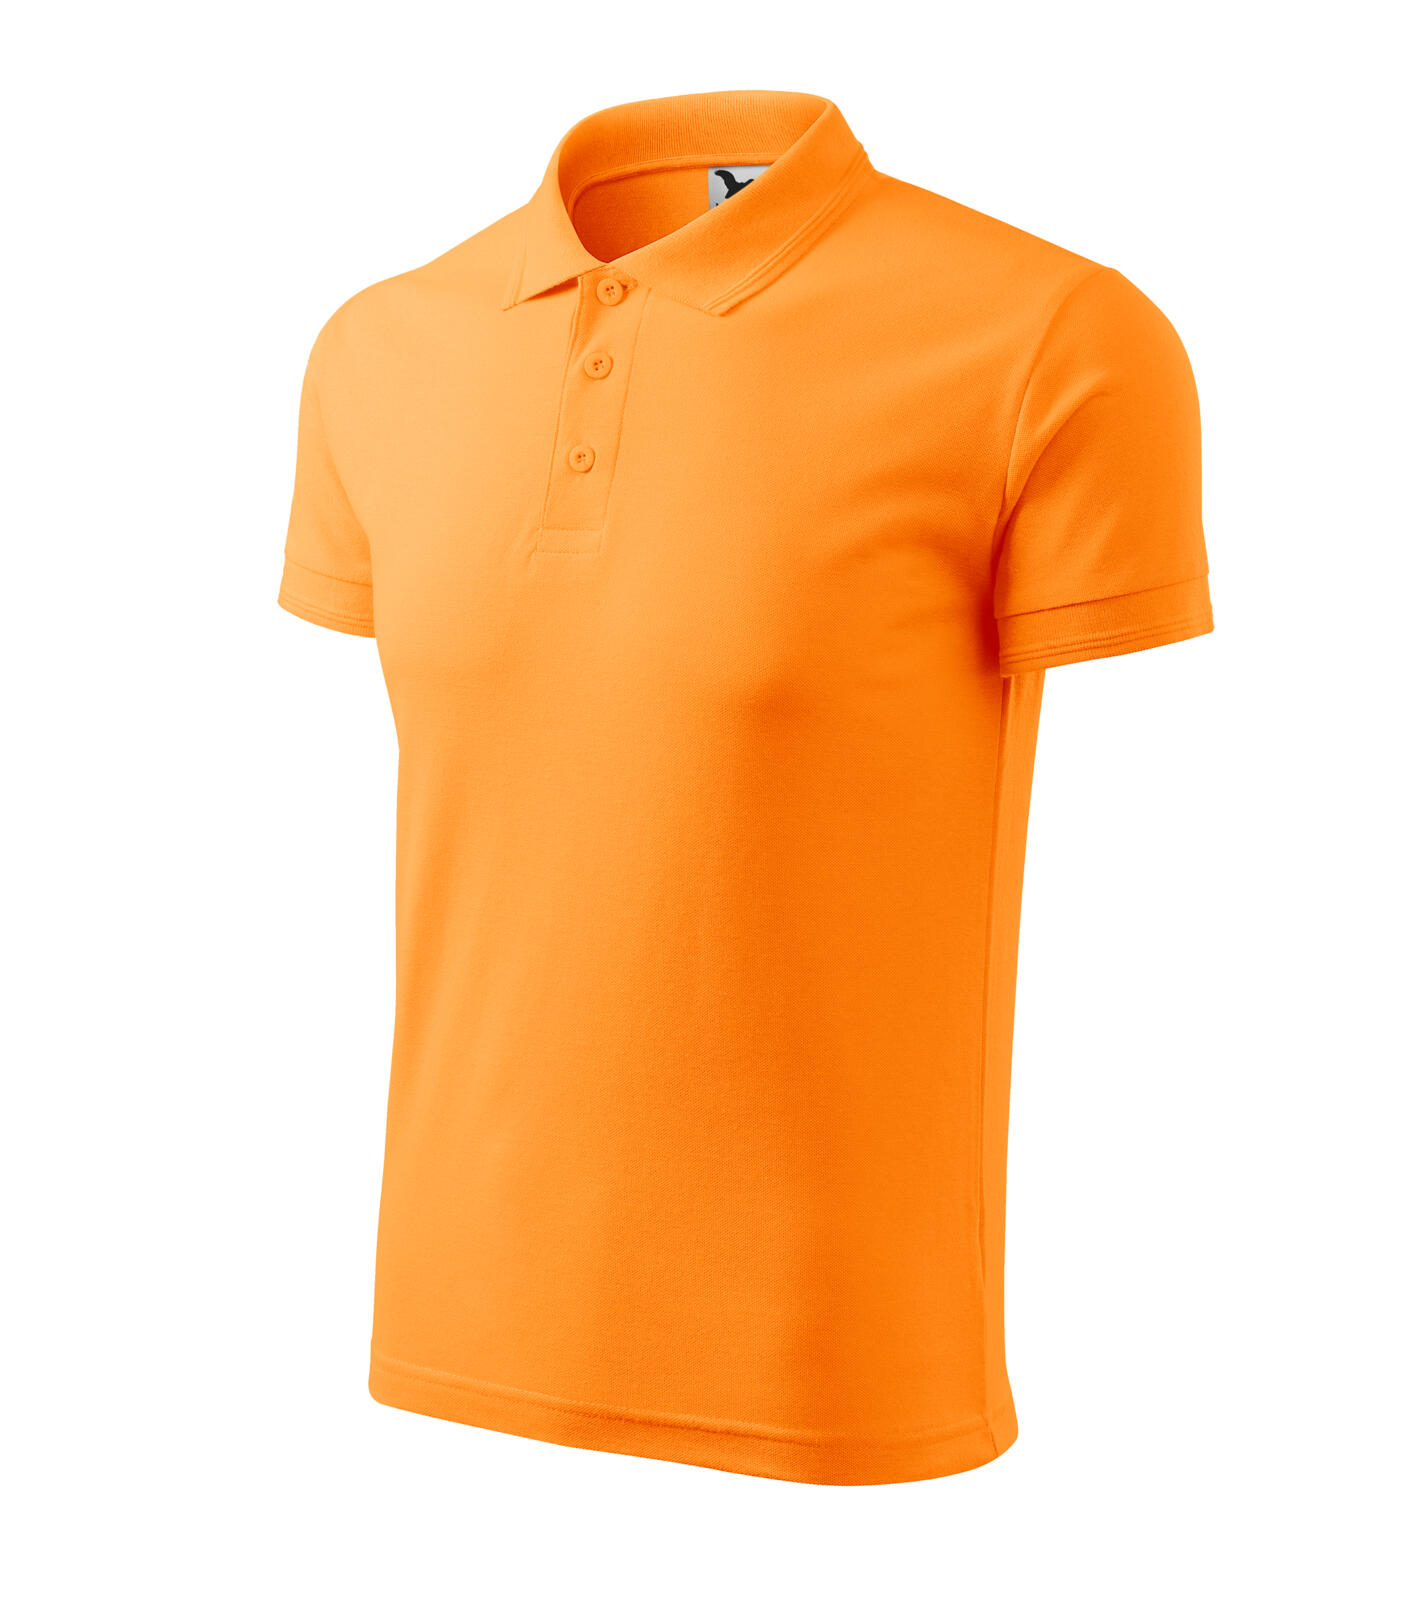 Pique Polo Polokošile pánská Barva: tangerine orange, Velikost: 3XL